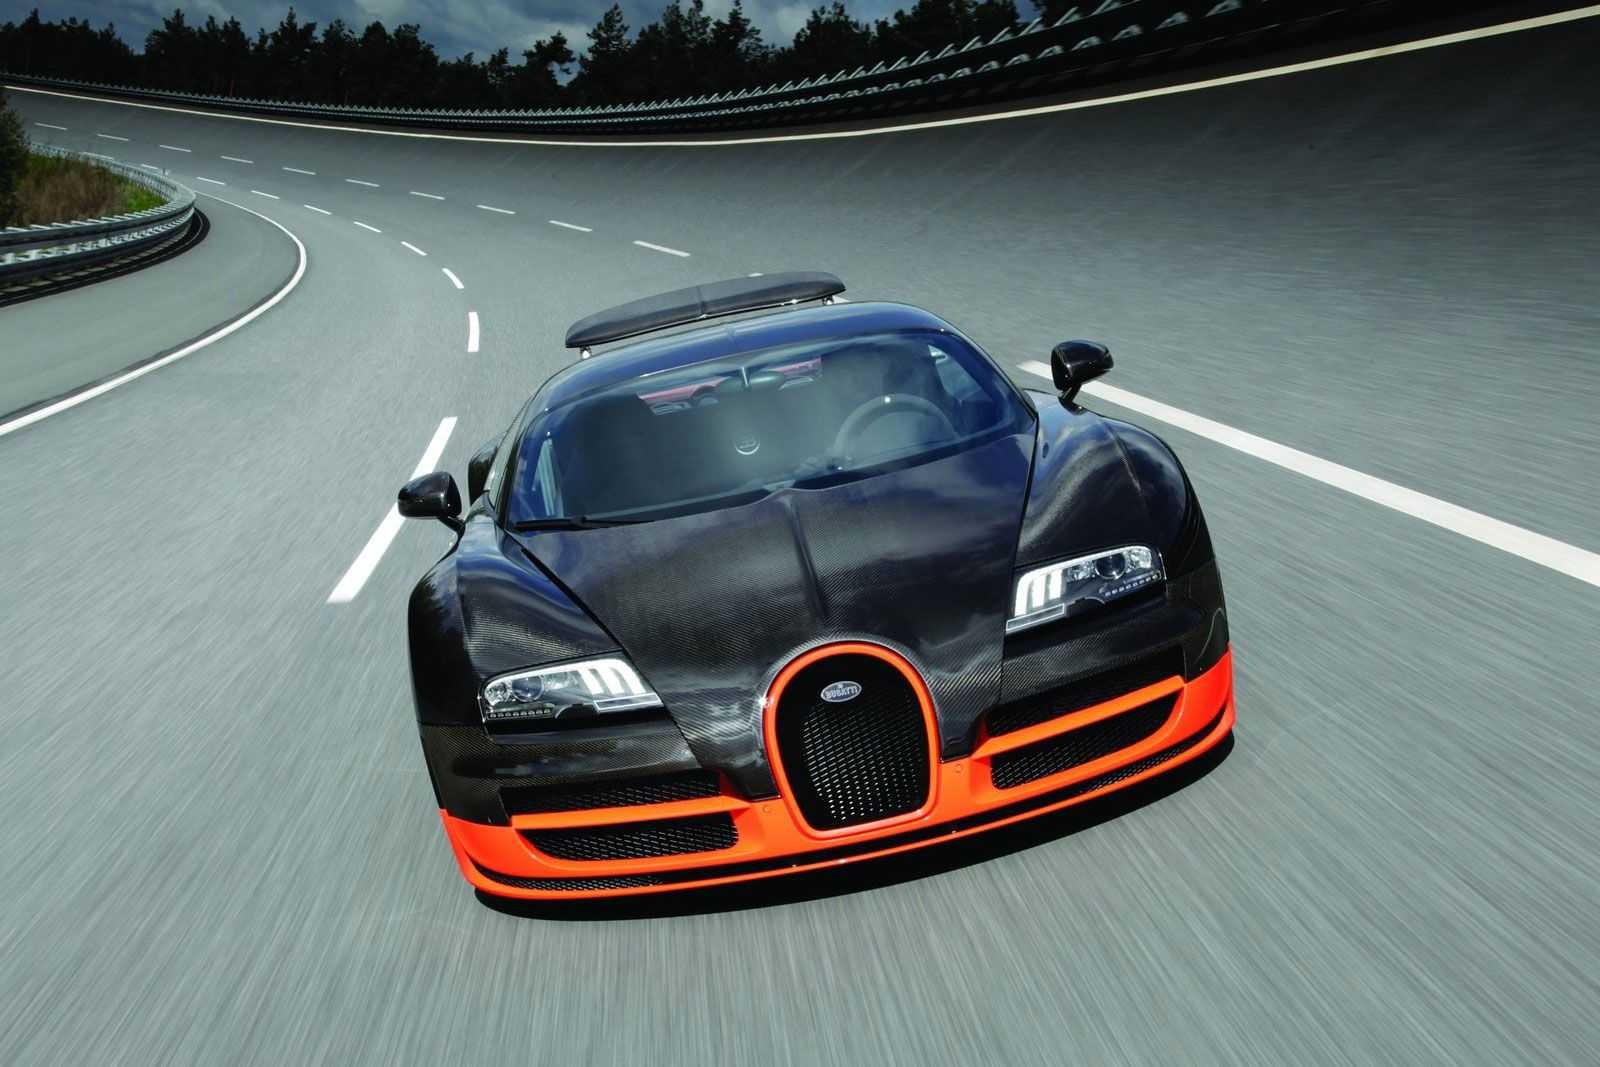 Быстрые спортивные машины. Bugatti Veyron 16.4 super Sport 2010. Машина Bugatti Veyron 16.4 Supersport. Машина Bugatti Veyron super Sport. Бугатти Вейрон 2010.